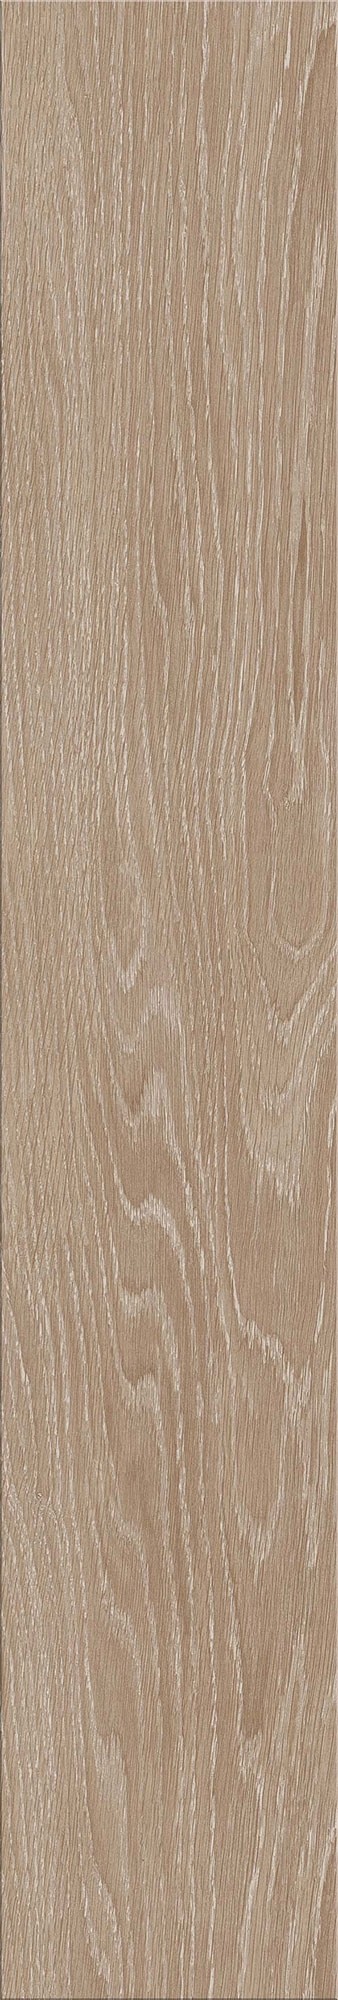 Expona Commercial - Blond Limed Oak 4081